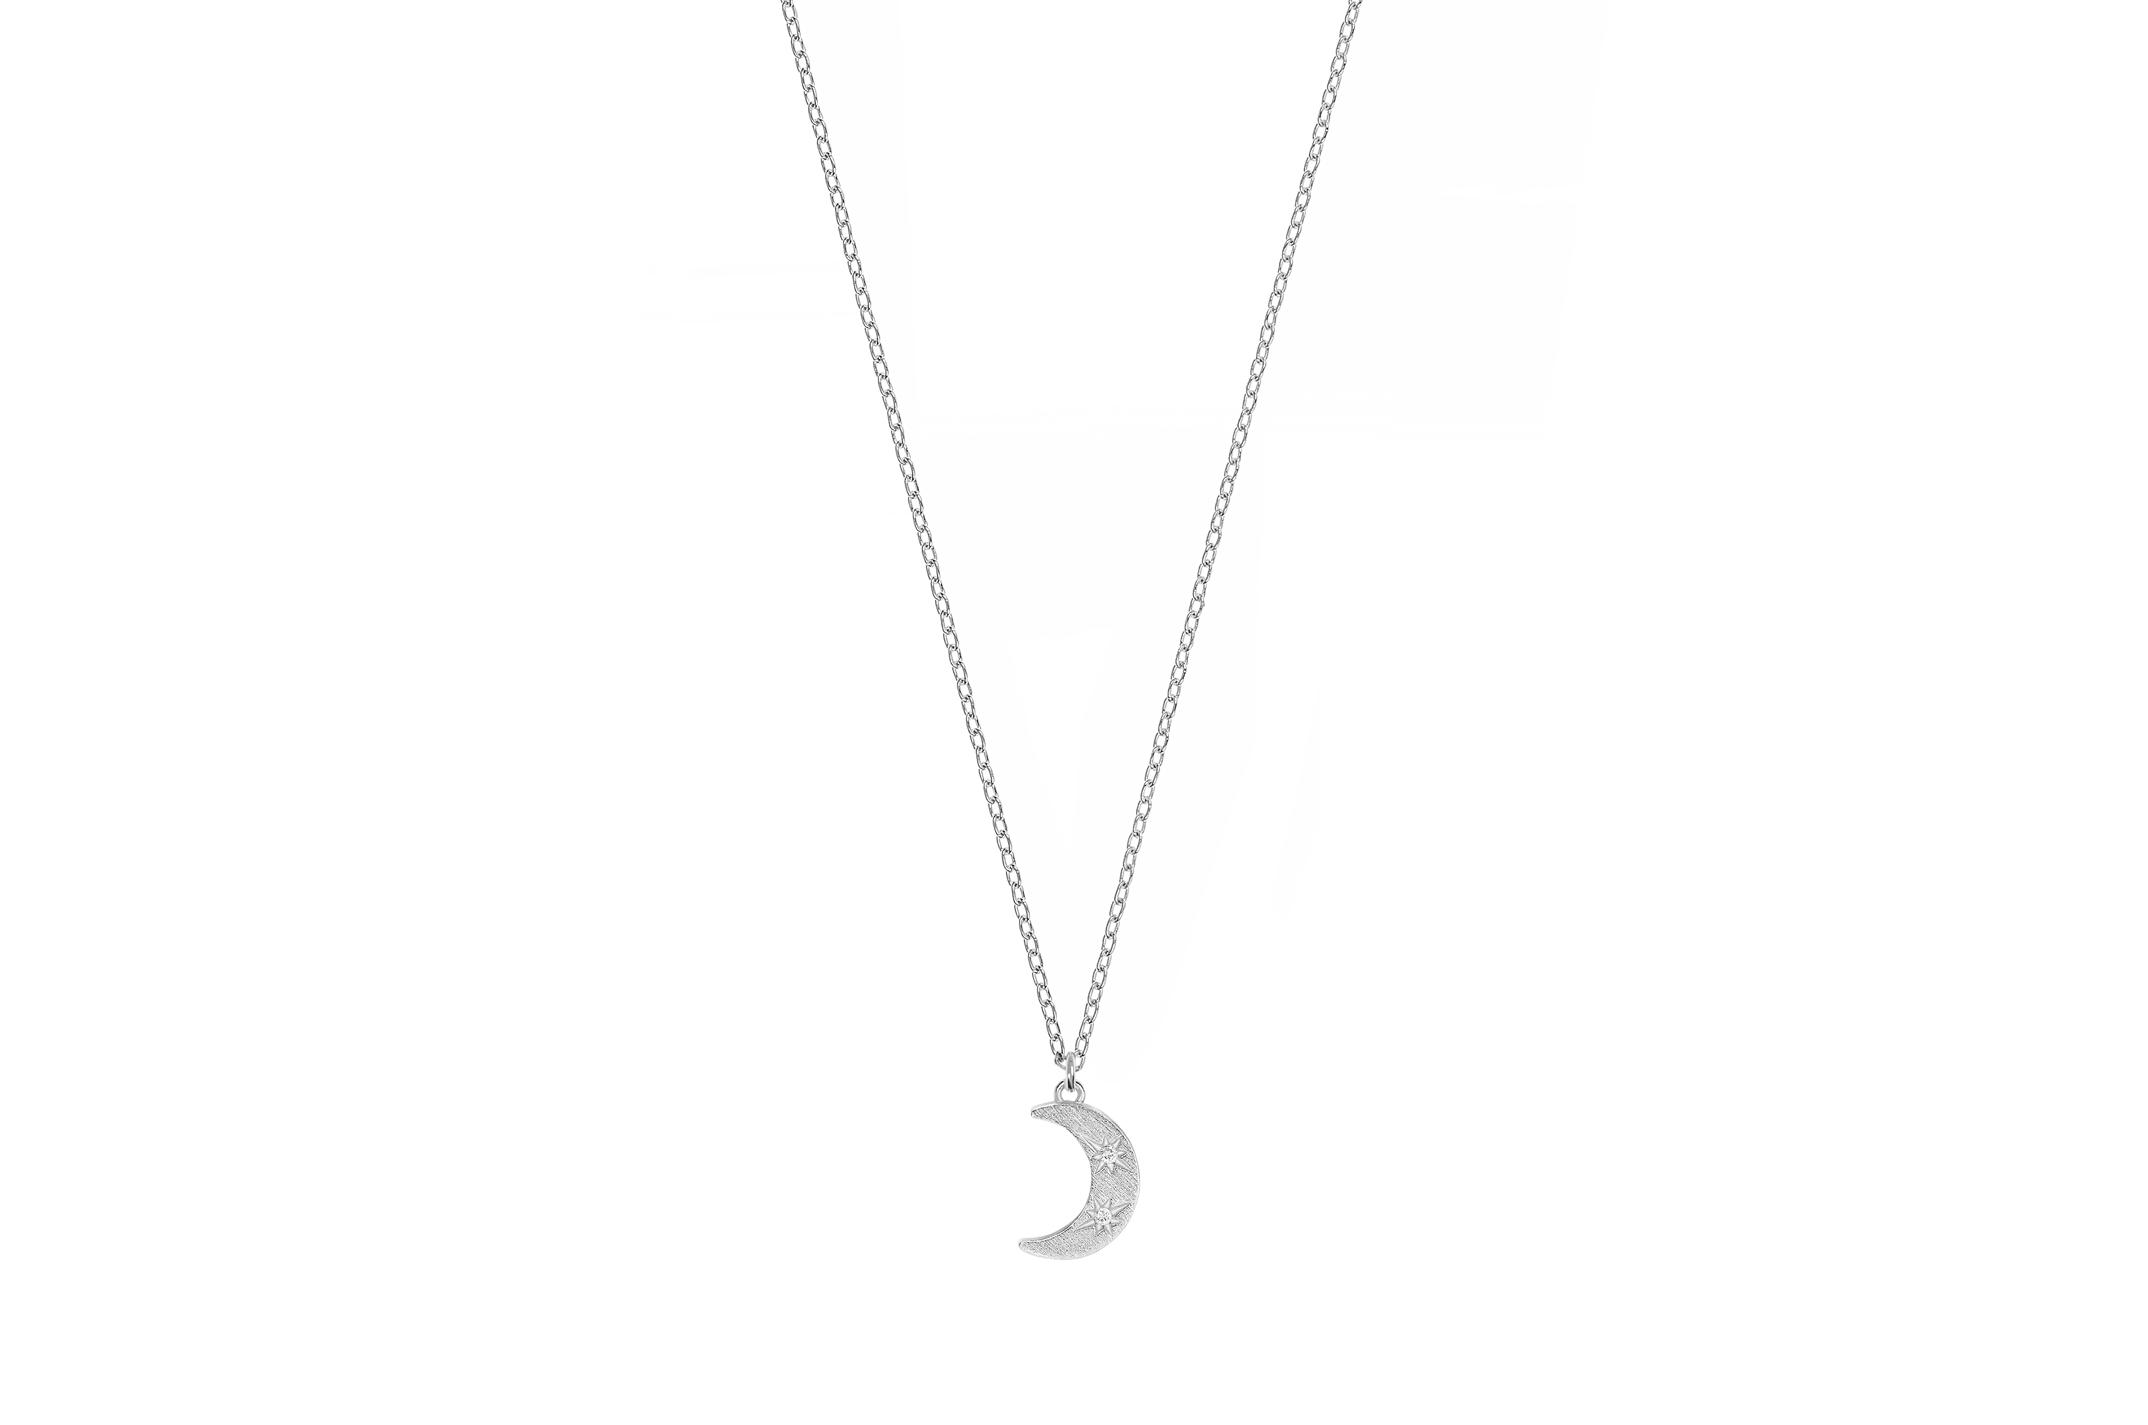 Joia: colar;Material: prata 925;Peso: 1.60 gr;Pedras: zircónias;Cor: branco;Medida: 42 cm;Género: mulher